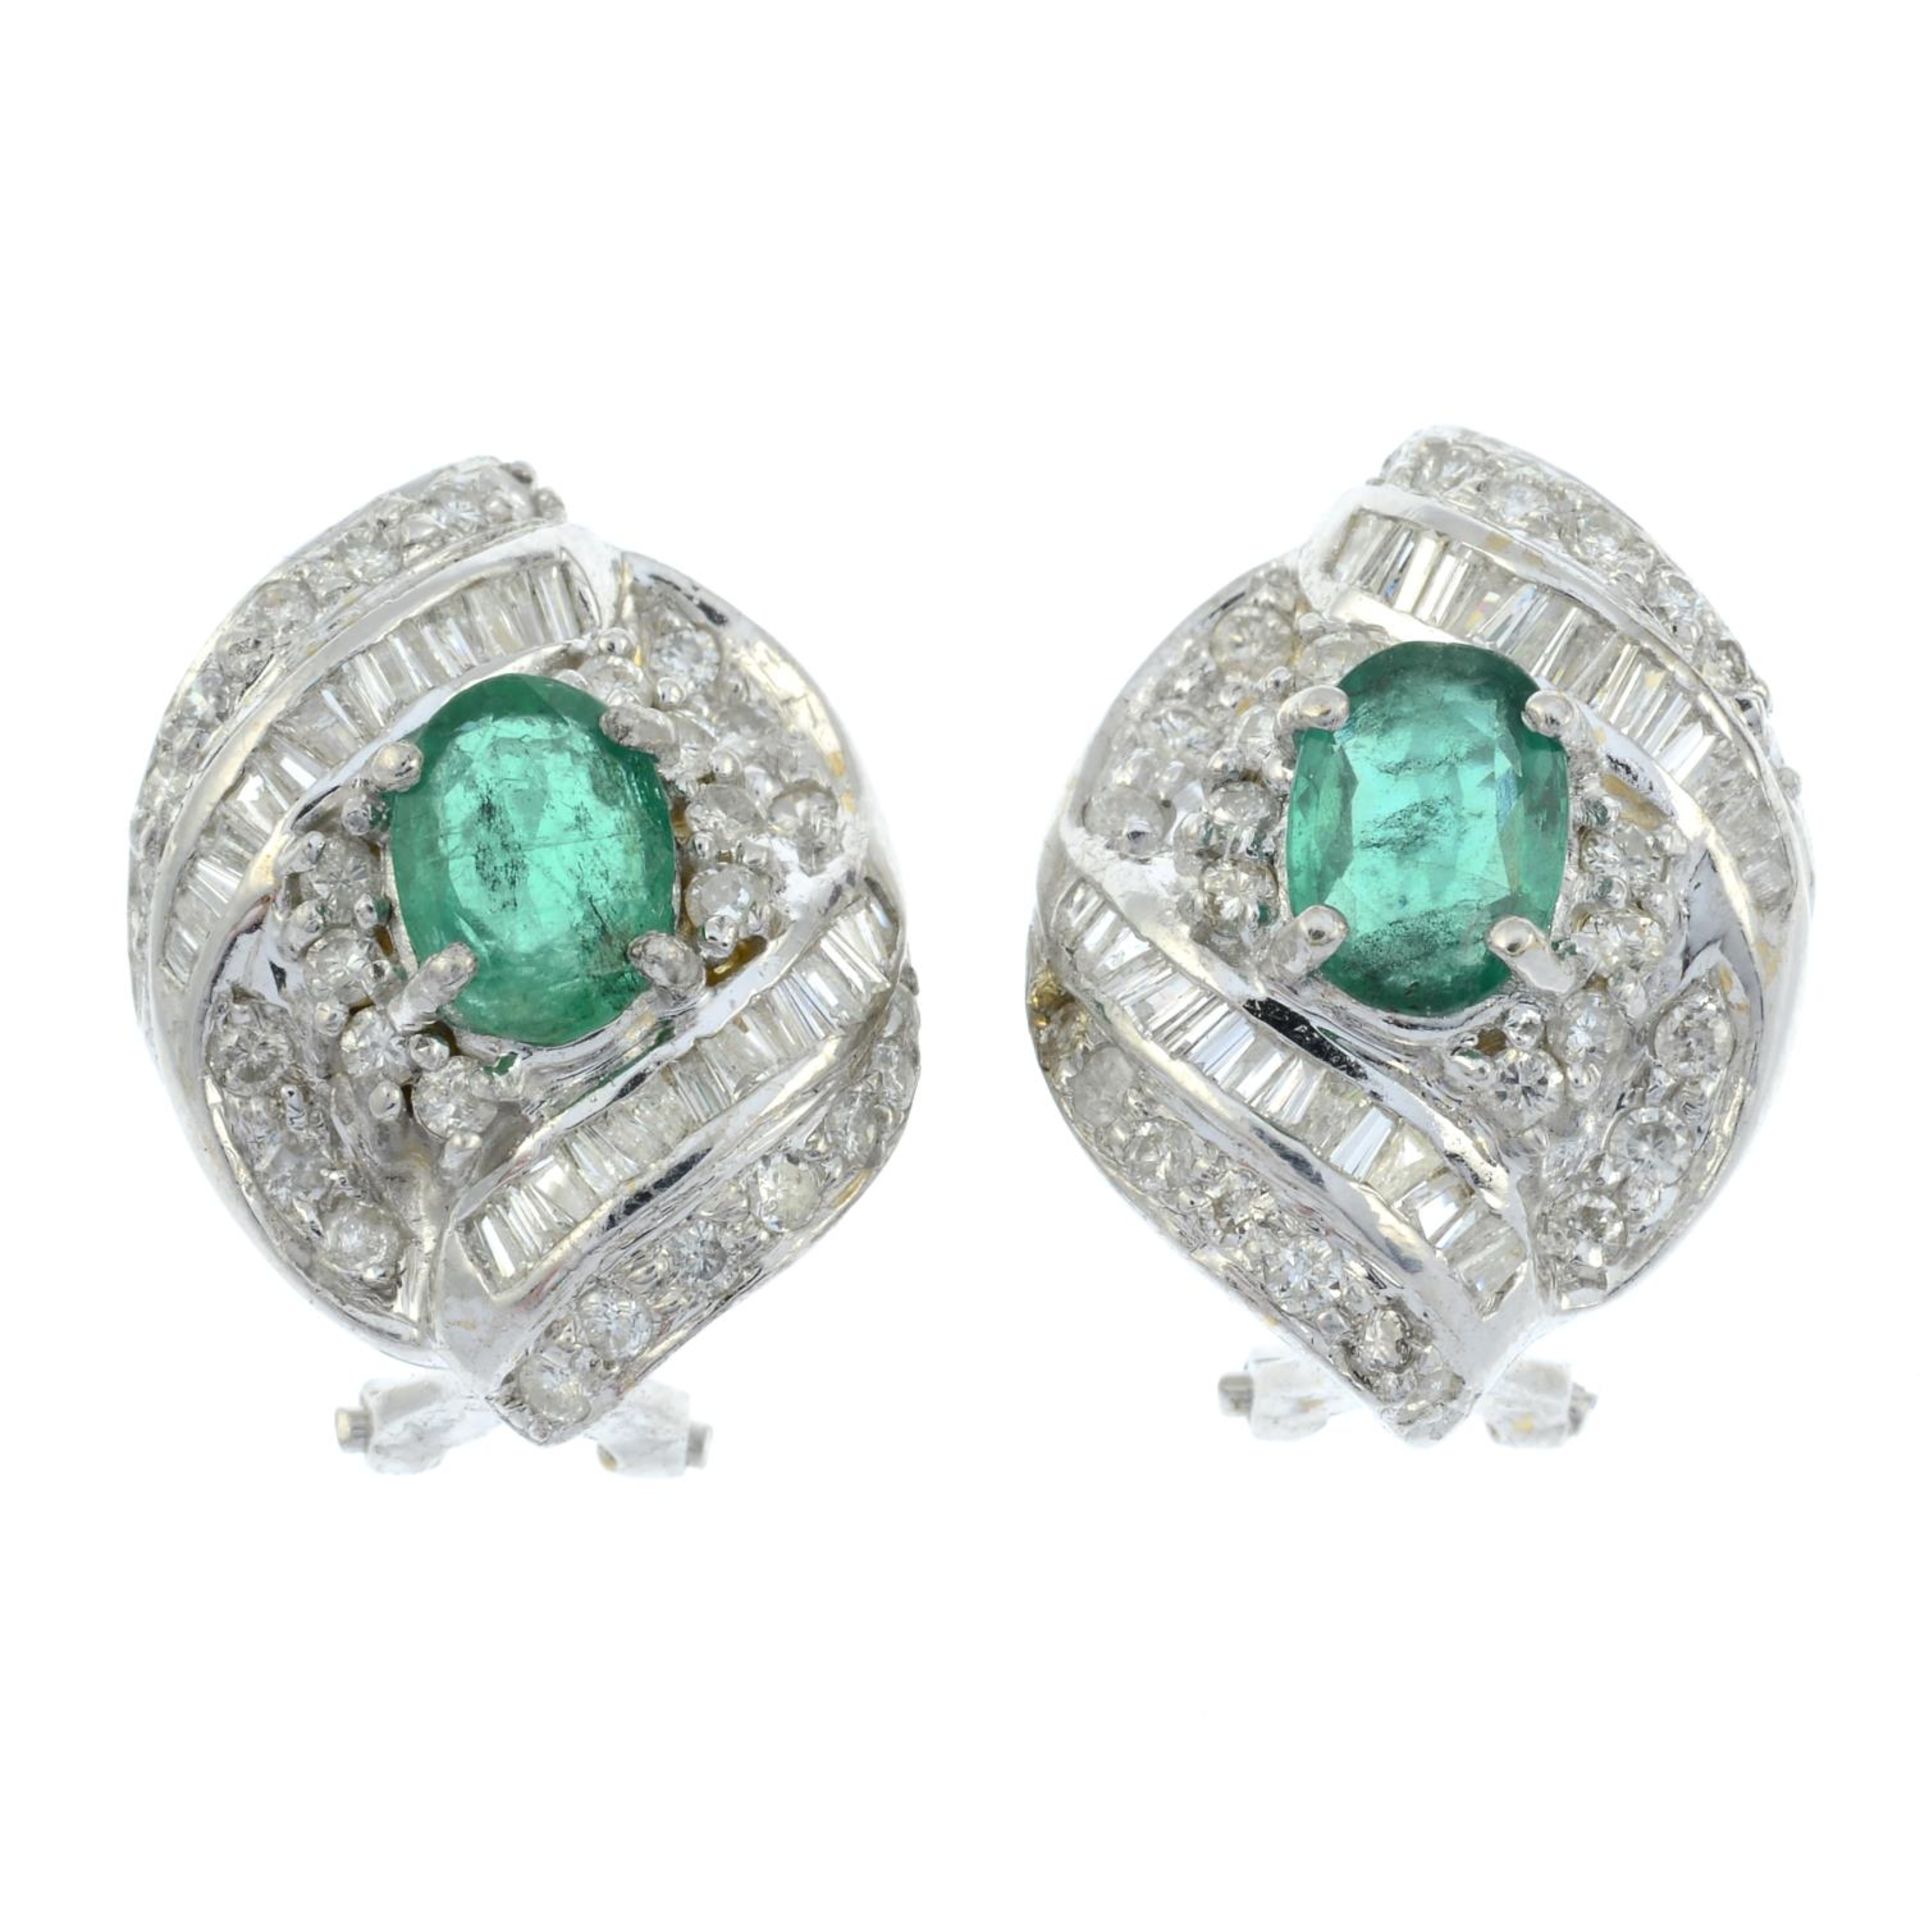 A pair of emerald and vari-cut diamond scrolling cluster earrings.